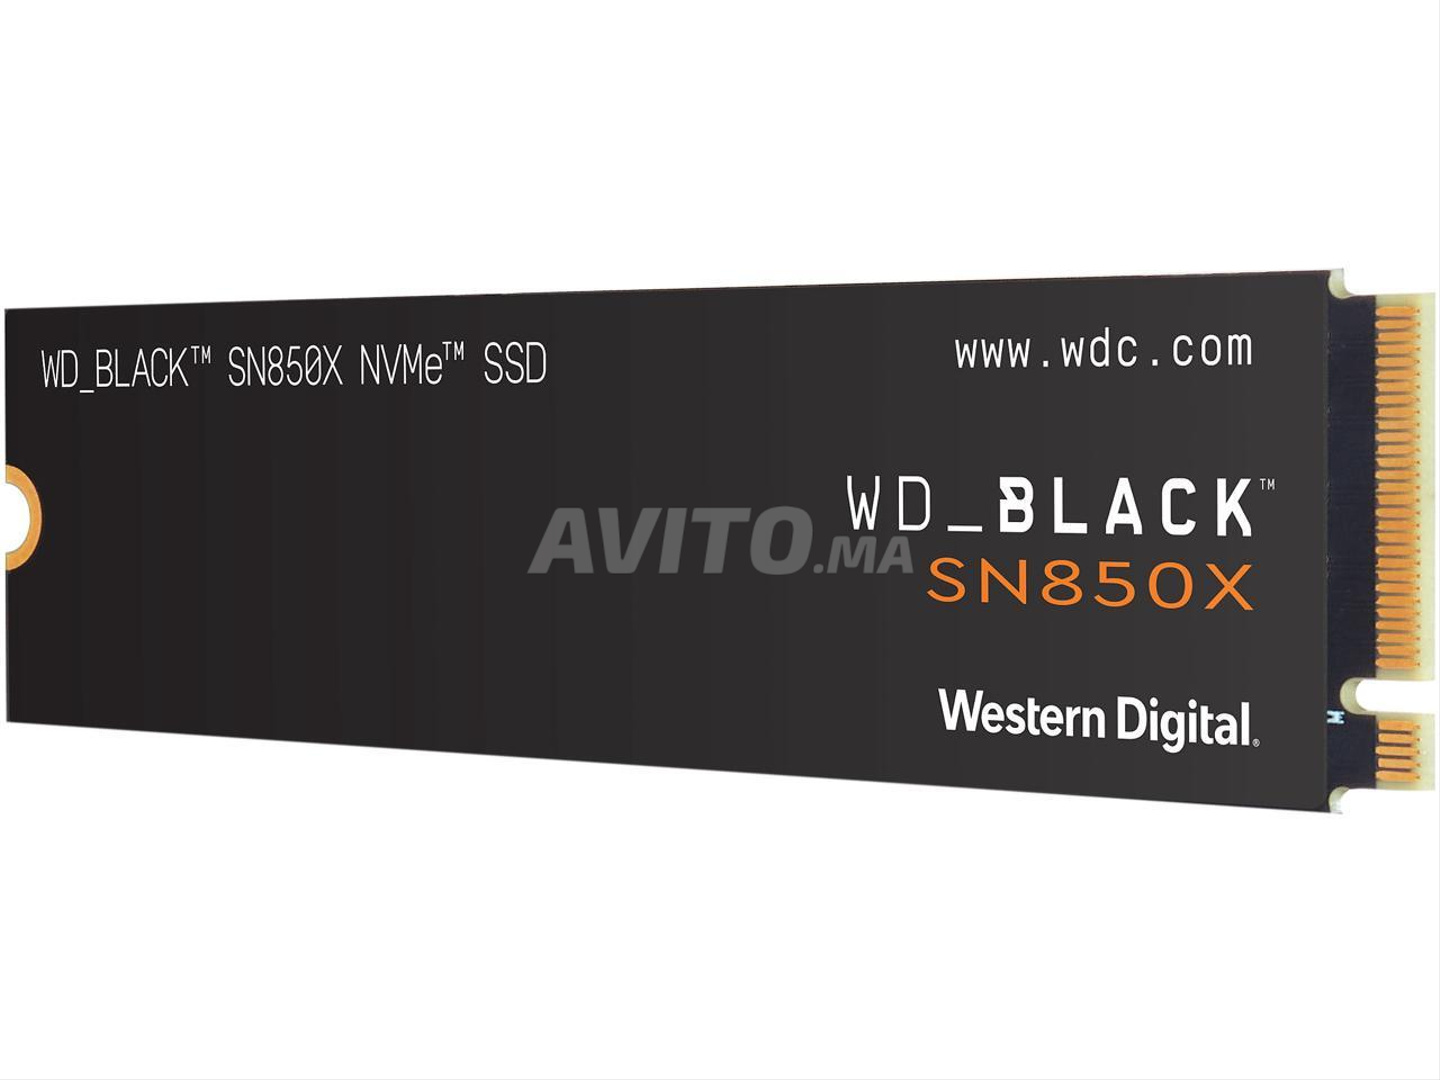 Disque dur interne SSD Western Digital BLACK SN750 SE M.2 2280 NVMe PCIe  250 Go (WDS250G1B0E) prix Maroc